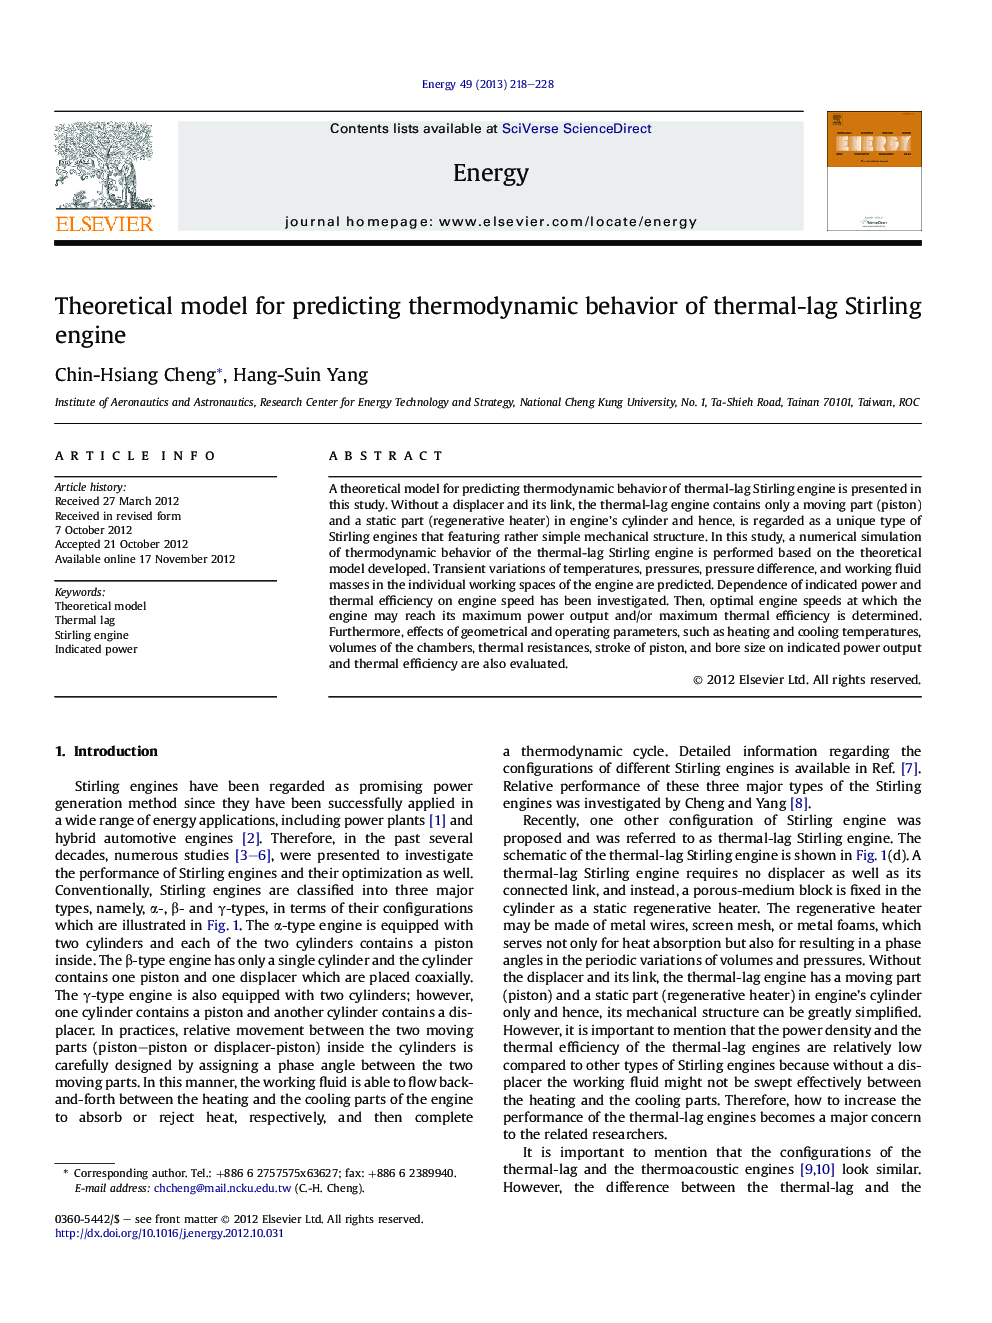 Theoretical model for predicting thermodynamic behavior of thermal-lag Stirling engine